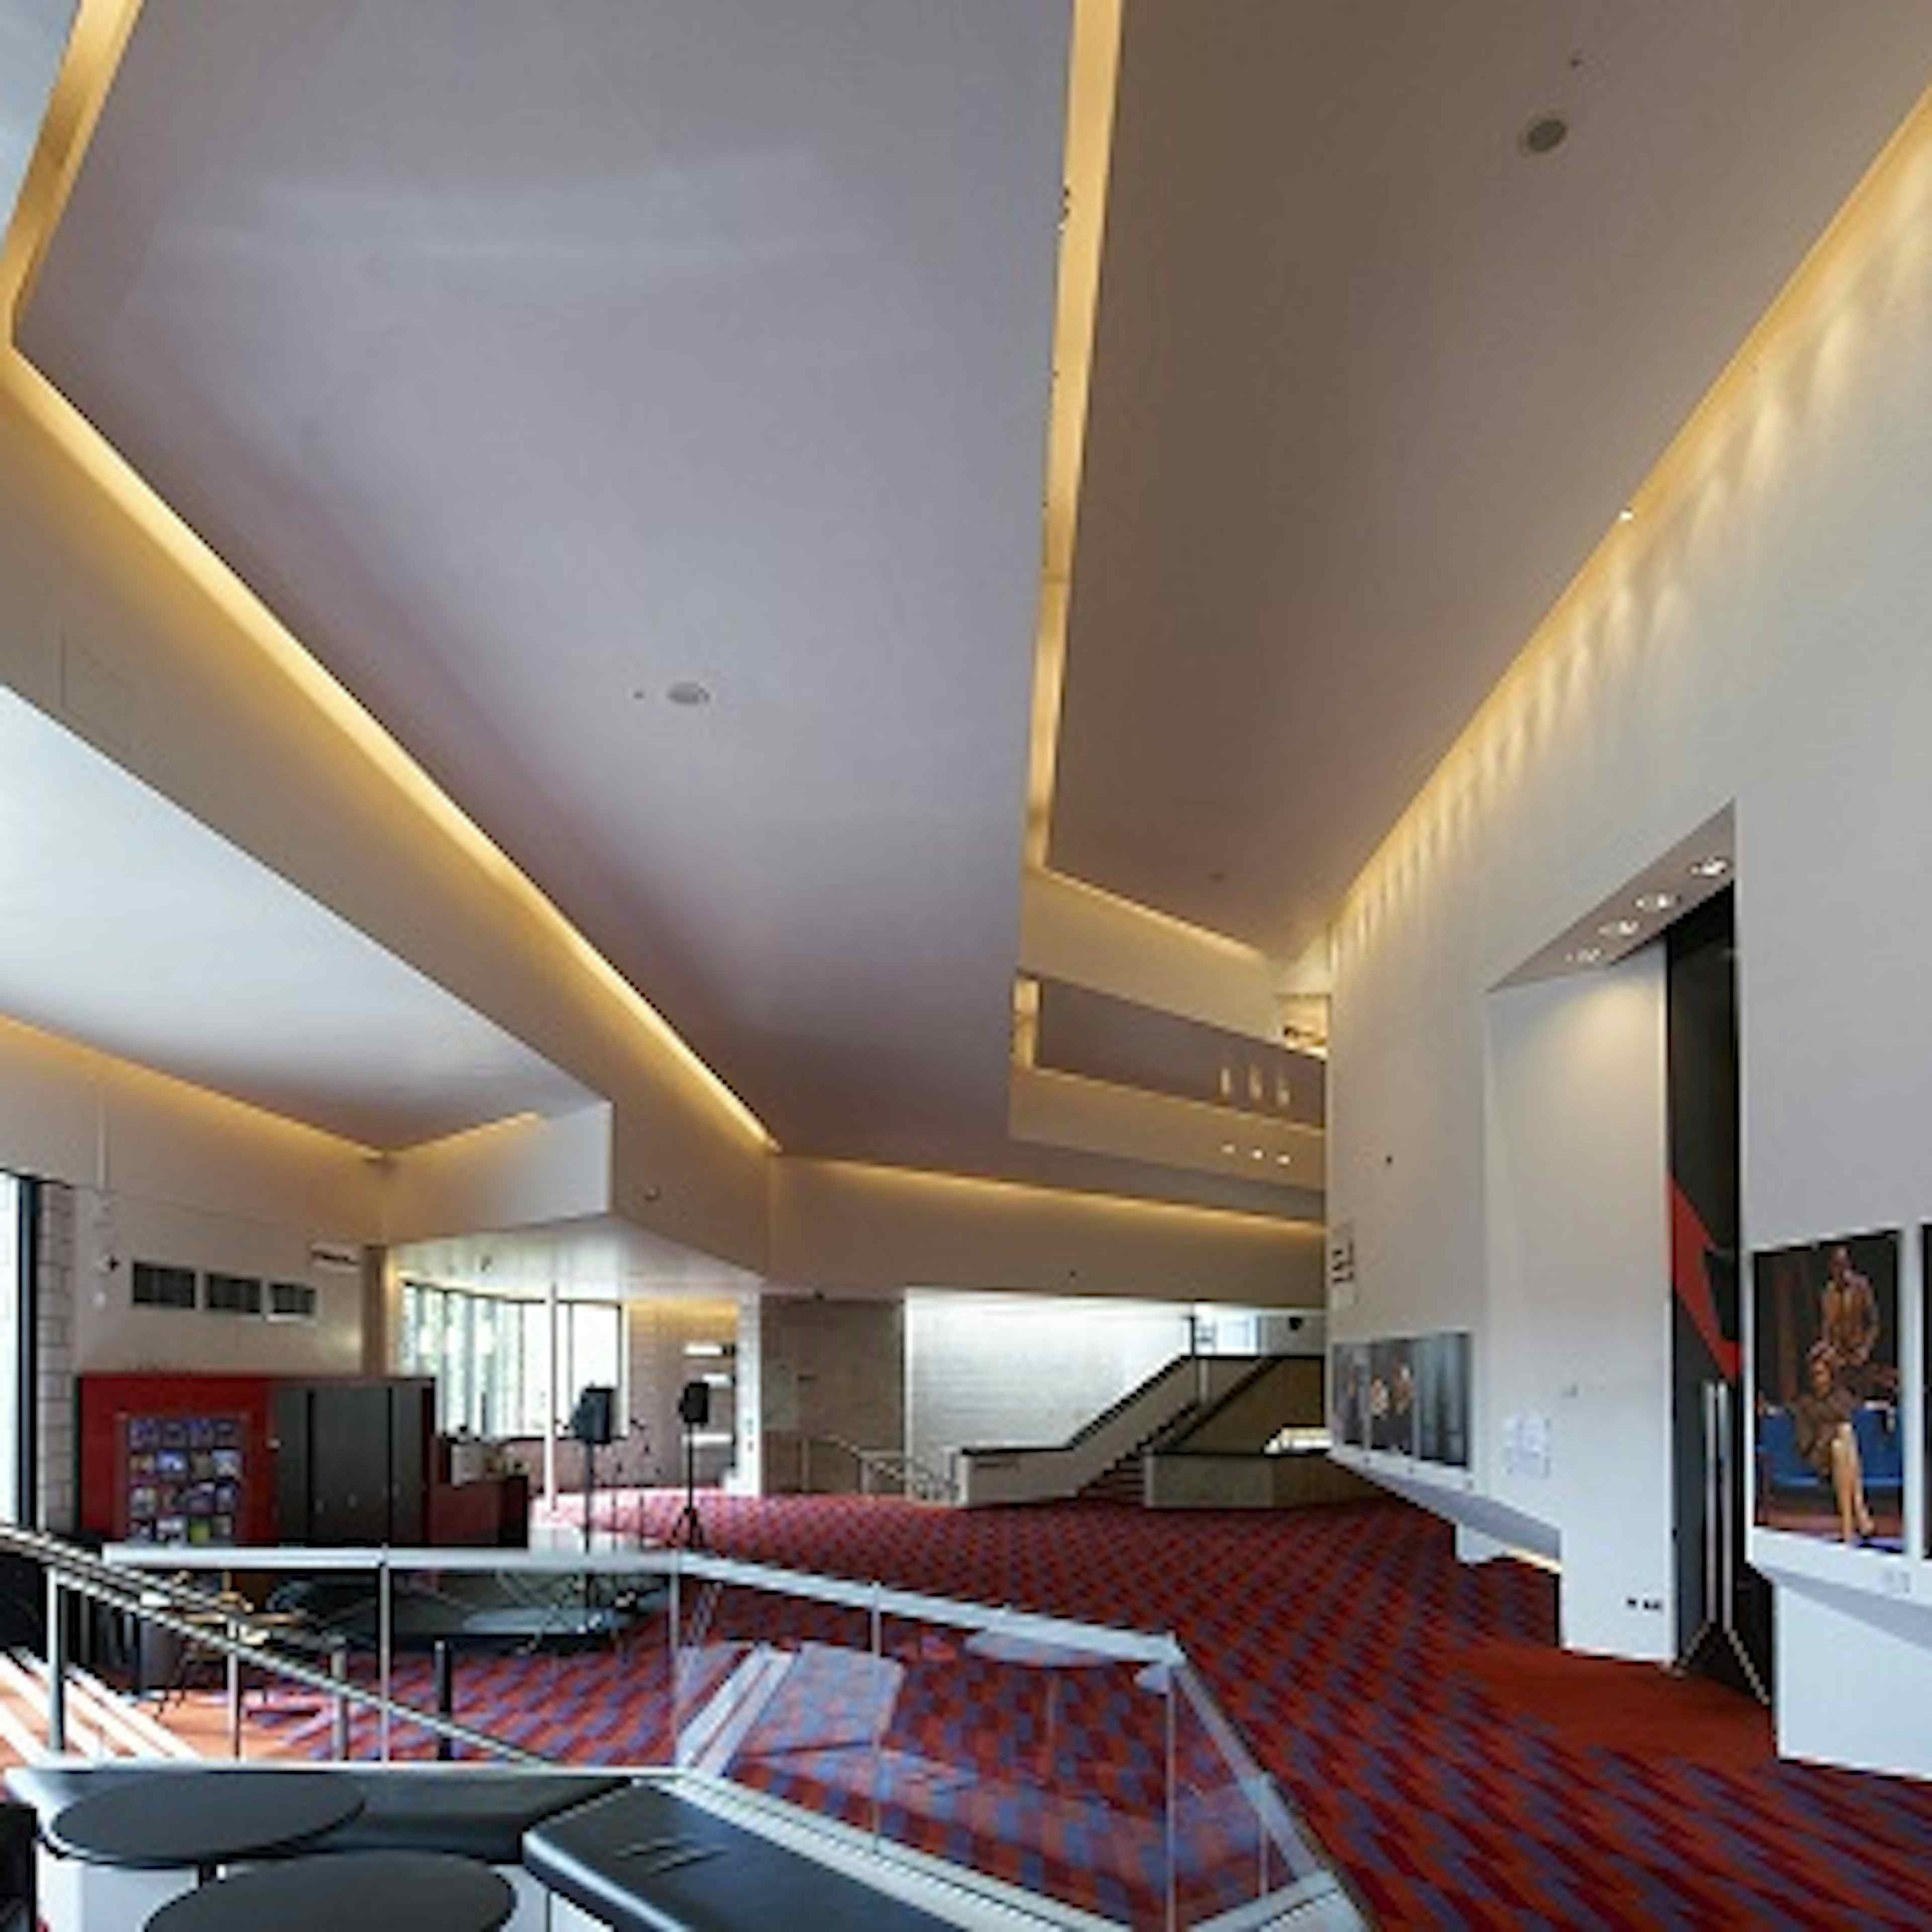 Crucible Theatre - Crucible Bar and Foyer image 3